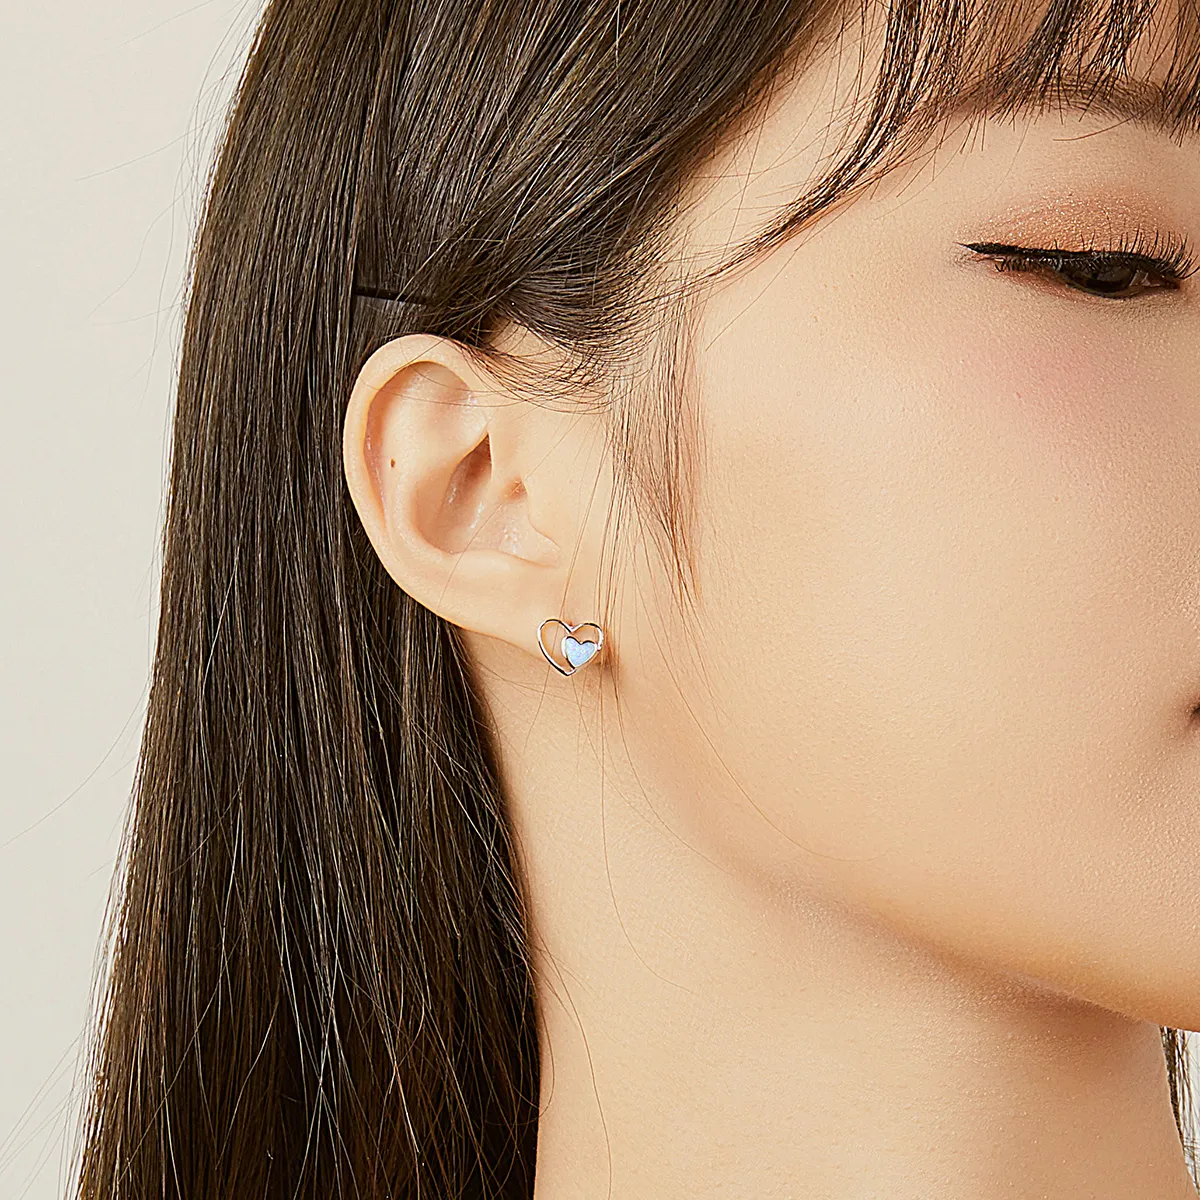 Pandora Style Heart Center Stud Earrings - SCE858